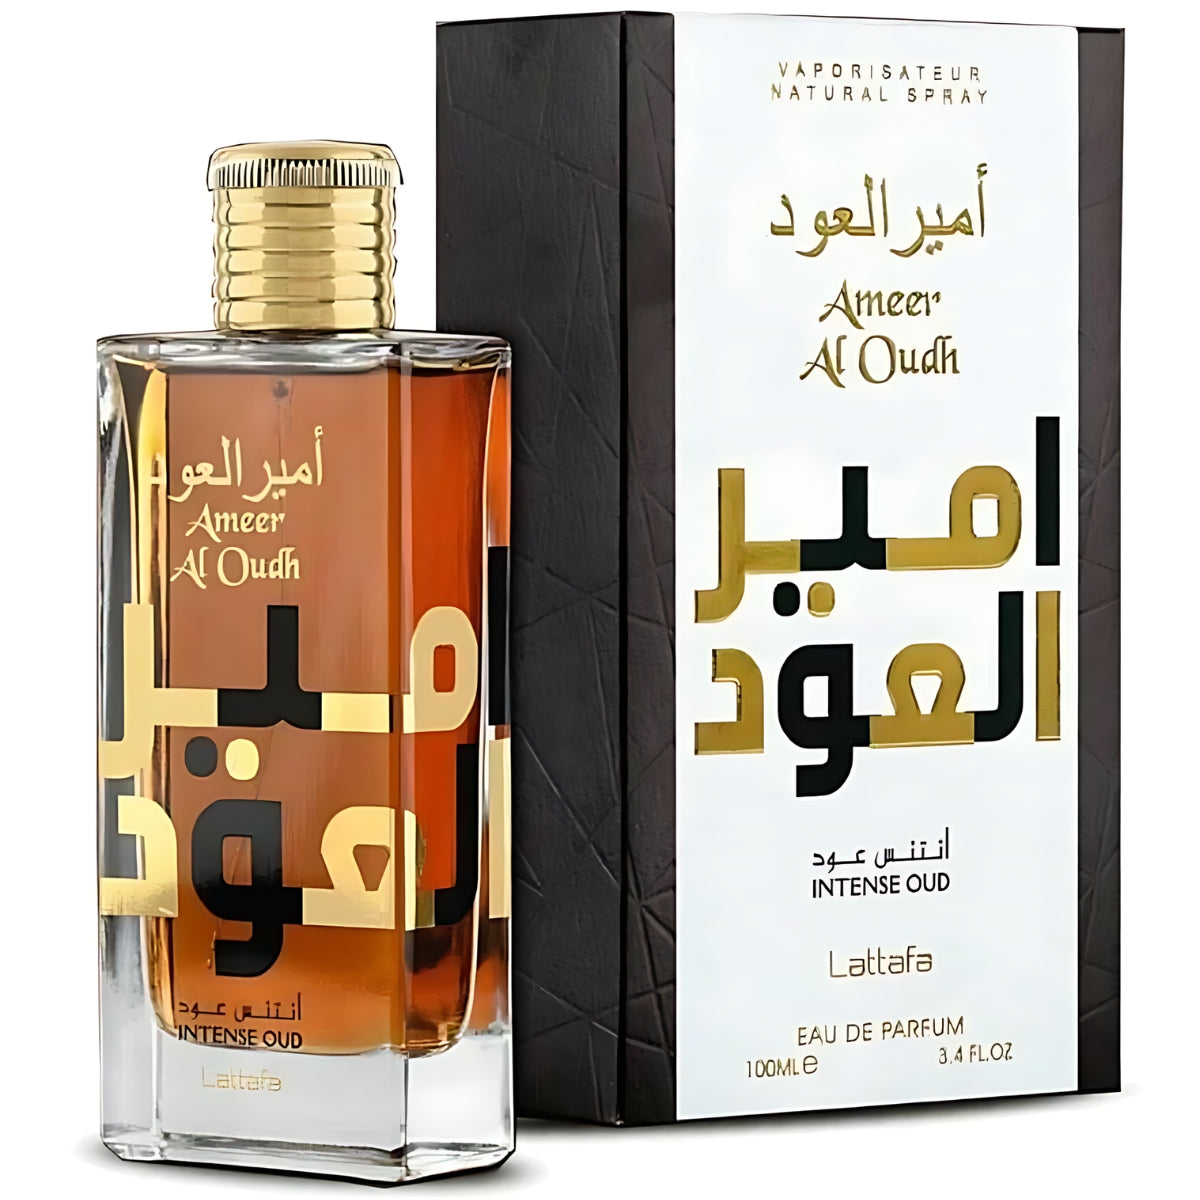 Lattafa Perfume Ameer Al Oudh Intense Oud Eau de Parfum 100ml